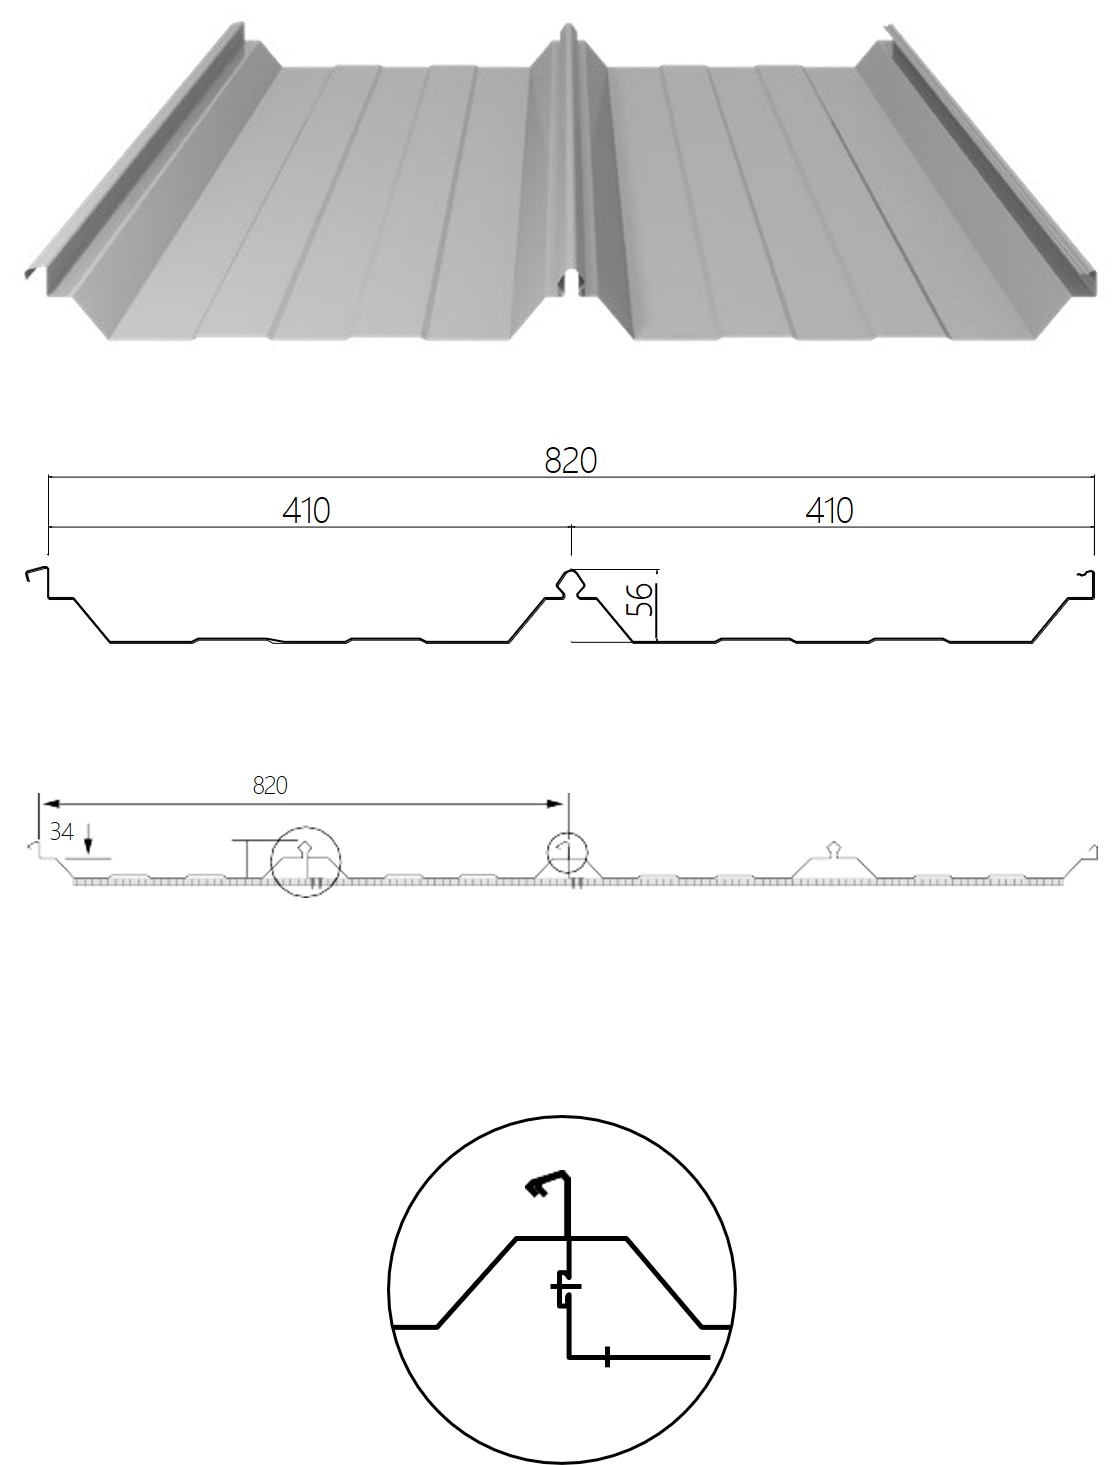 Erection seam-locked YX56-410-820 formed steel sheet